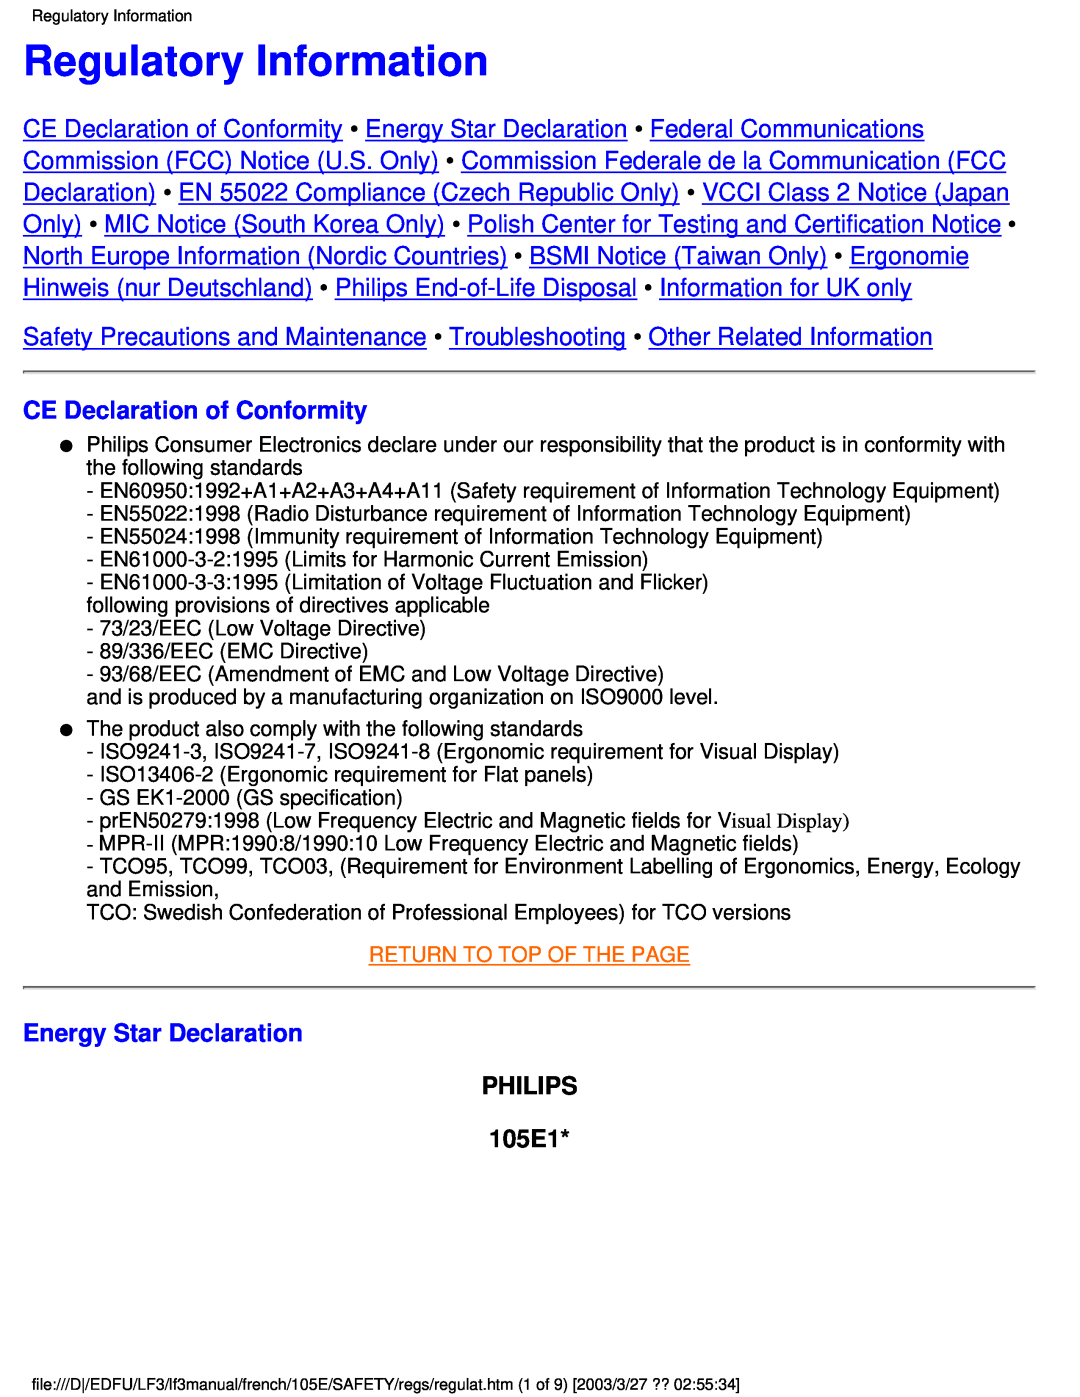 Philips user manual Regulatory Information, CE Declaration of Conformity, Energy Star Declaration, PHILIPS 105E1 